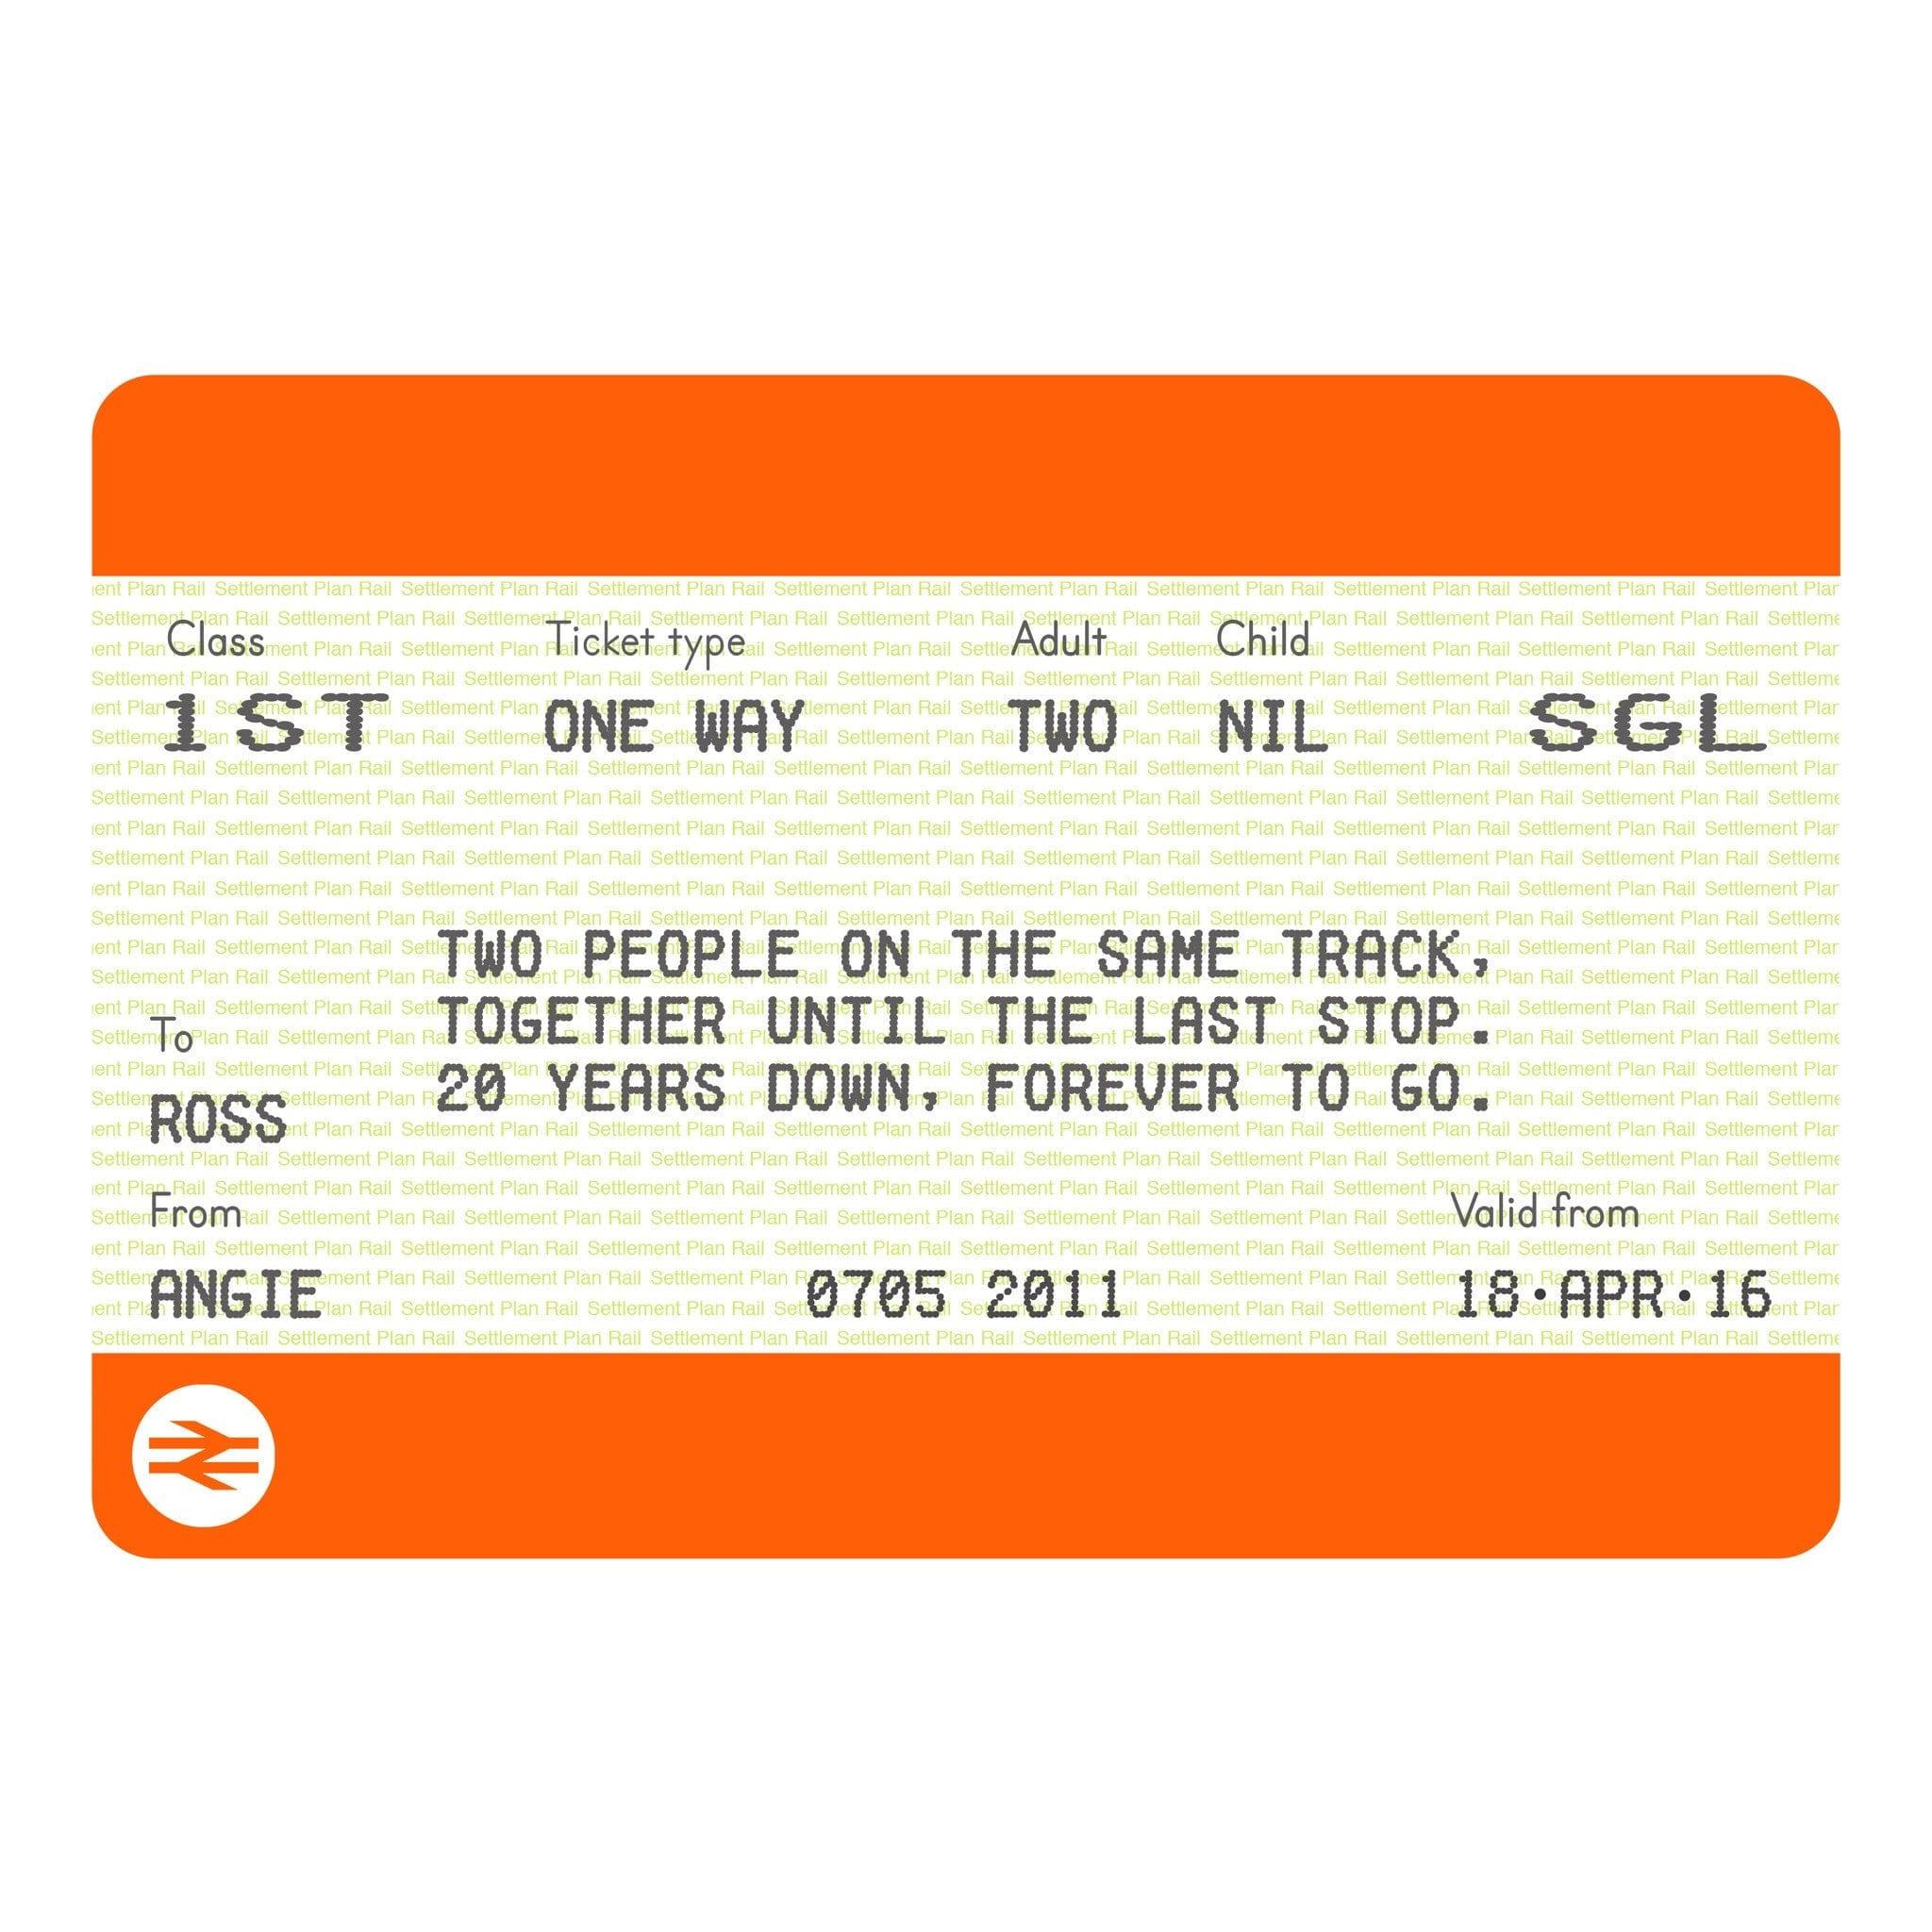 Full ticket. Билет Railway. Билет ticket. Train ticket. Train ticket to London.